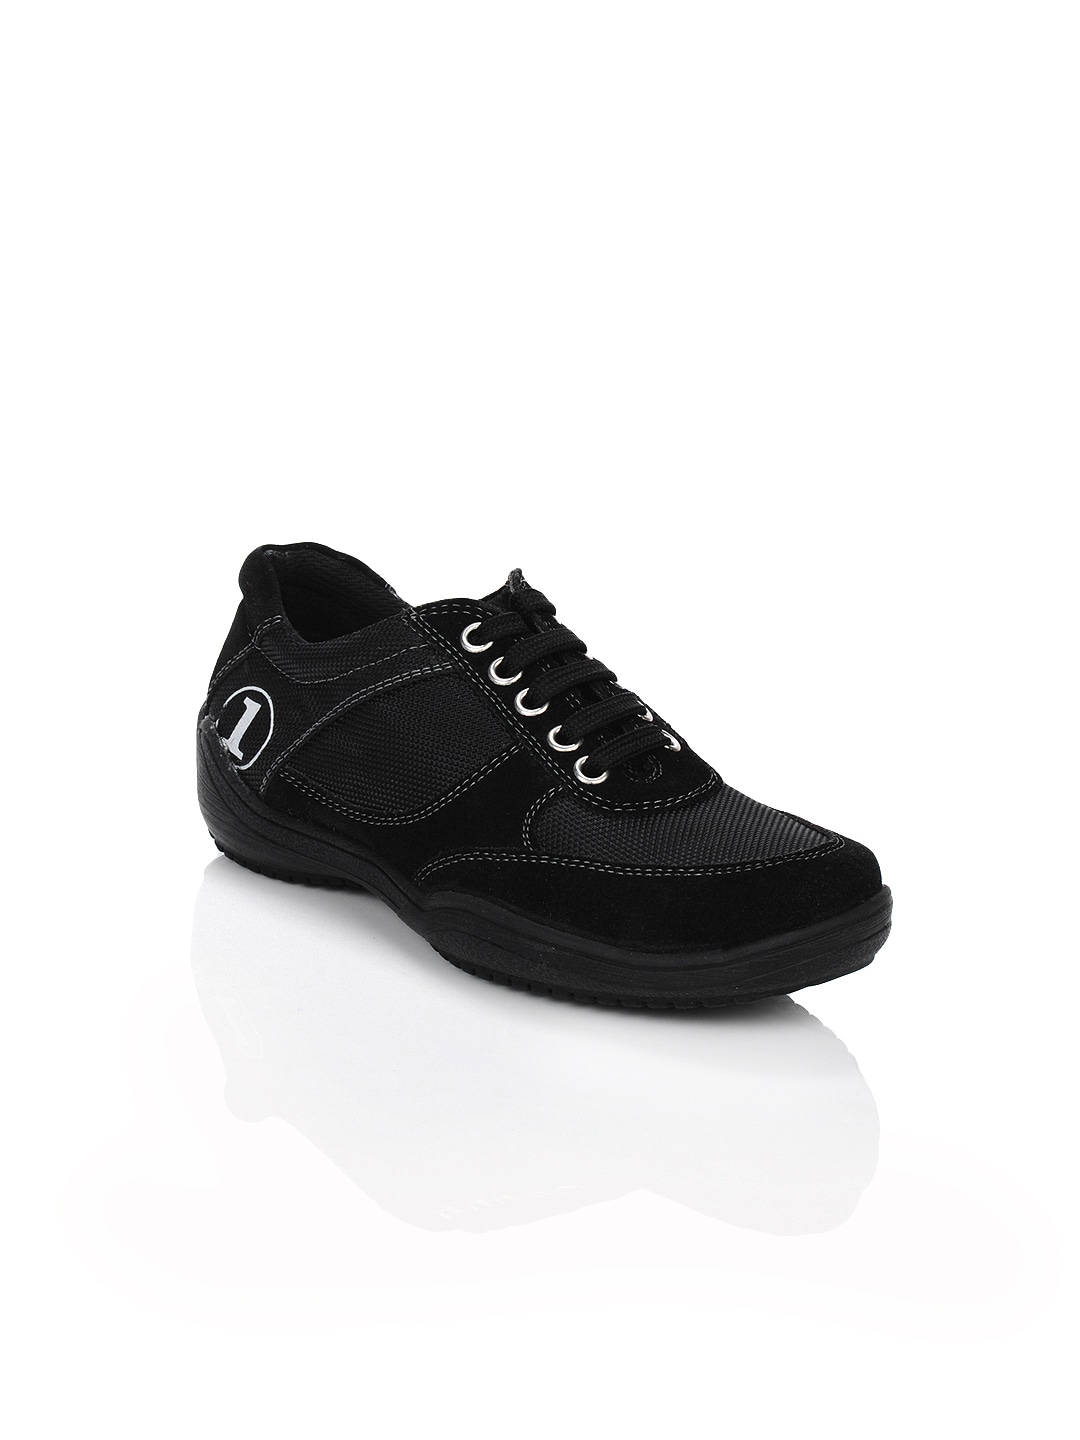 Enroute Teens Black Shoes